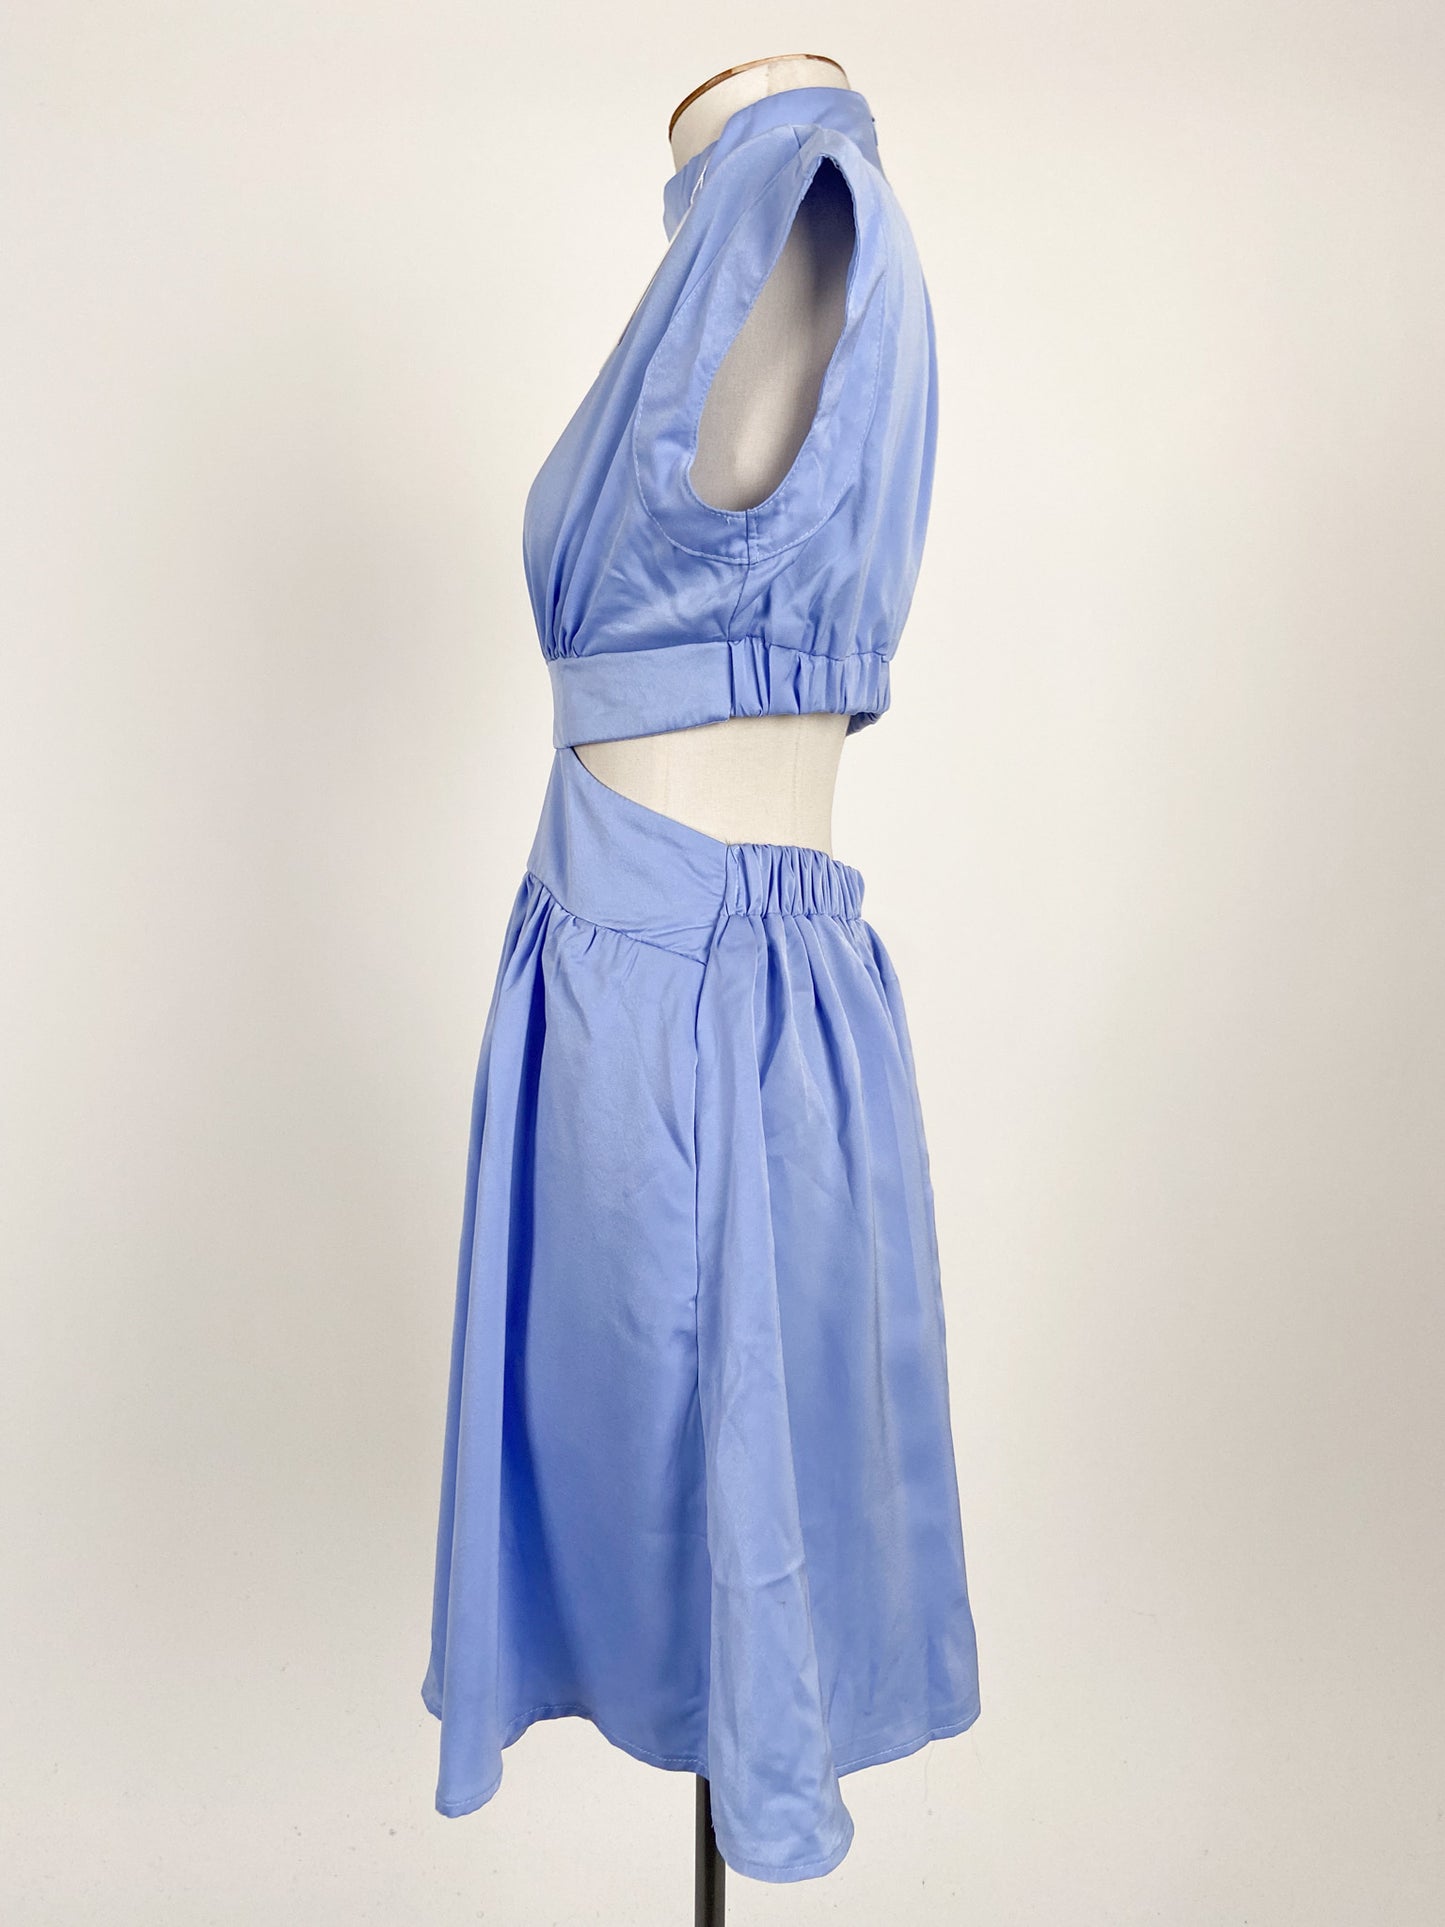 YH & CO | Blue Cocktail Dress | Size 6